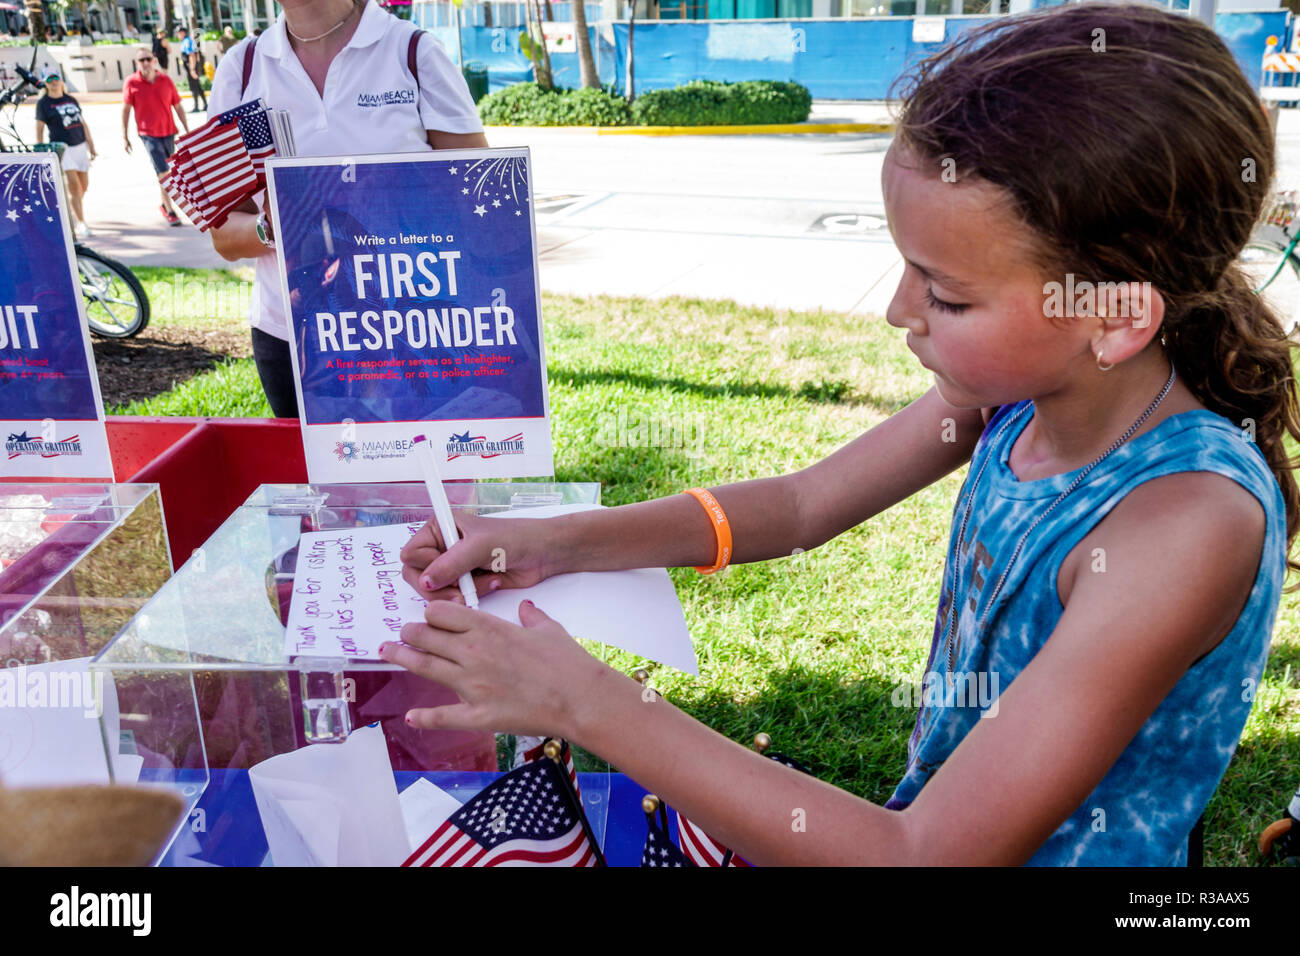 Miami Beach Florida,Ocean Drive,Veterans Day Parade activities,write letter gratitude American heroes first responders,girl girls,female kid kids chil Stock Photo